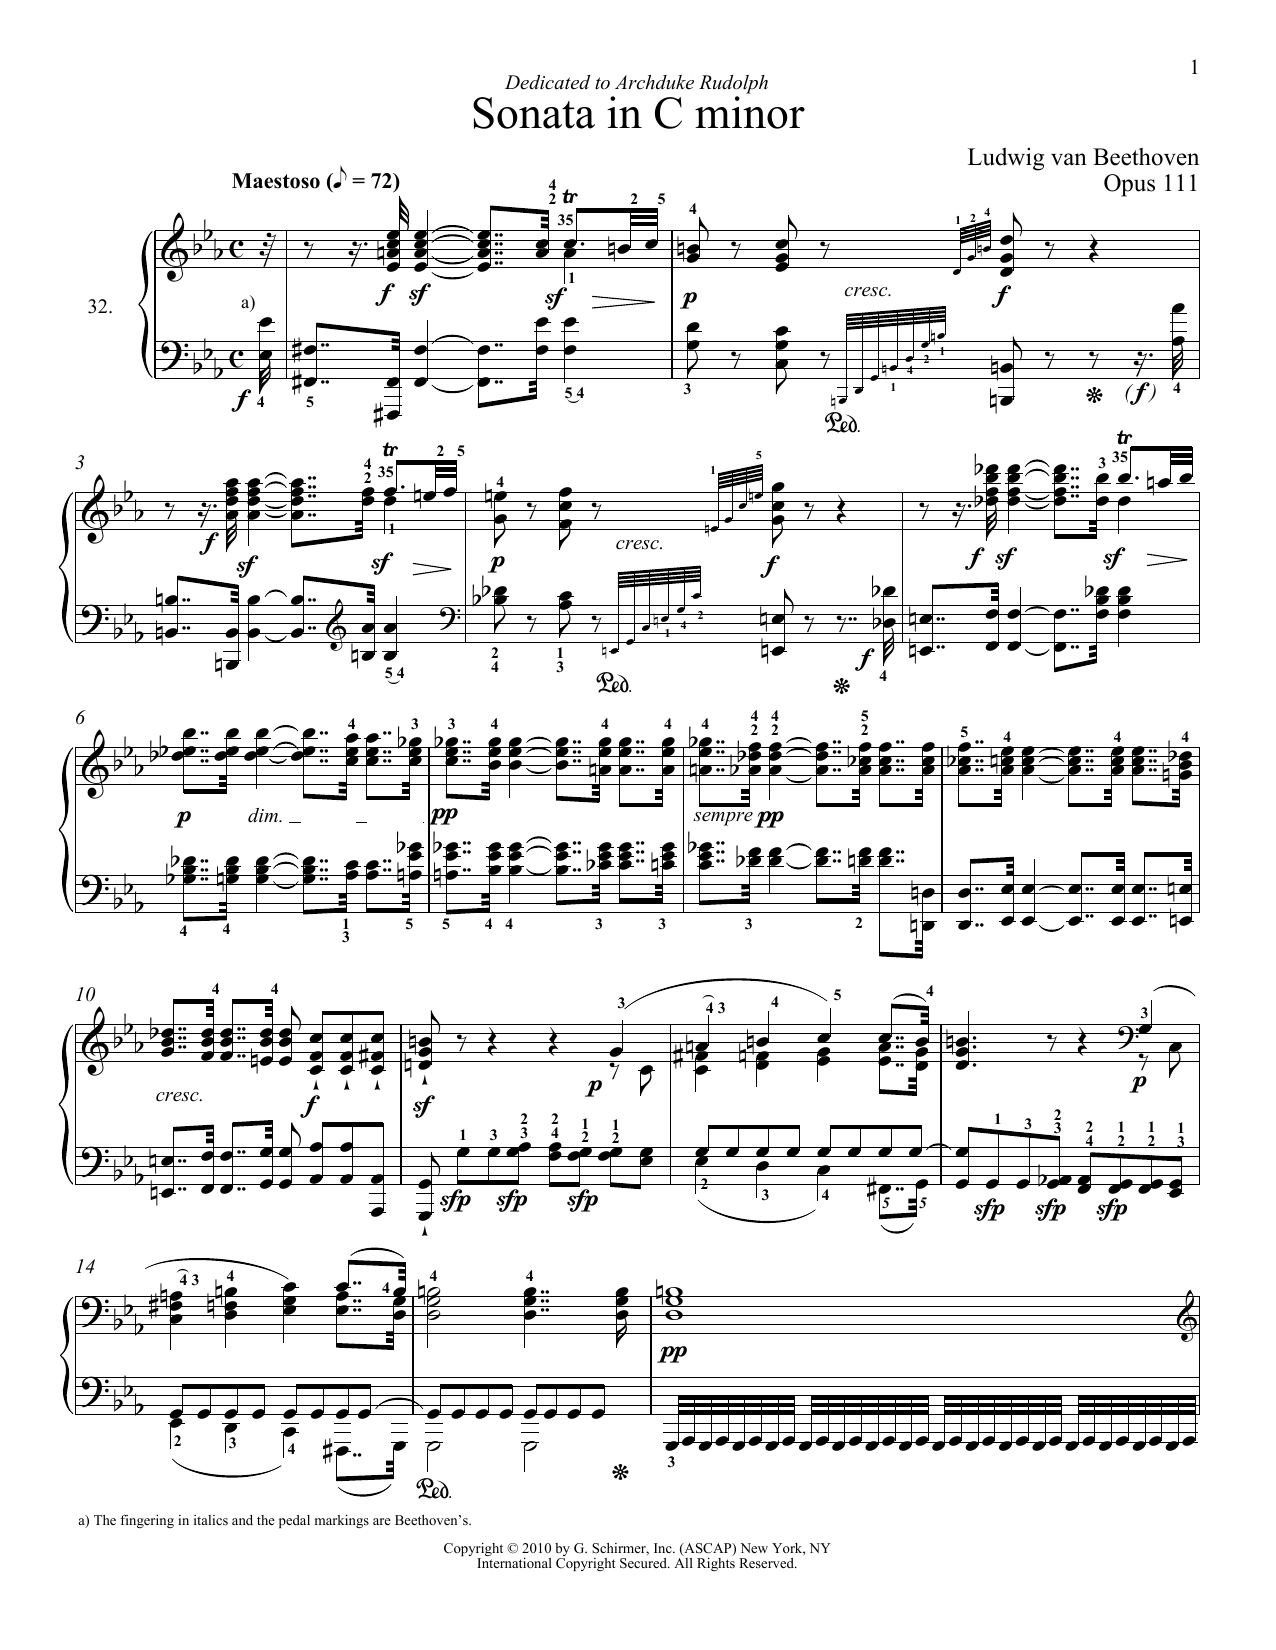 Ludwig van Beethoven Piano Sonata No. 32 In C minor, Op. 111 Sheet Music Notes & Chords for Piano - Download or Print PDF